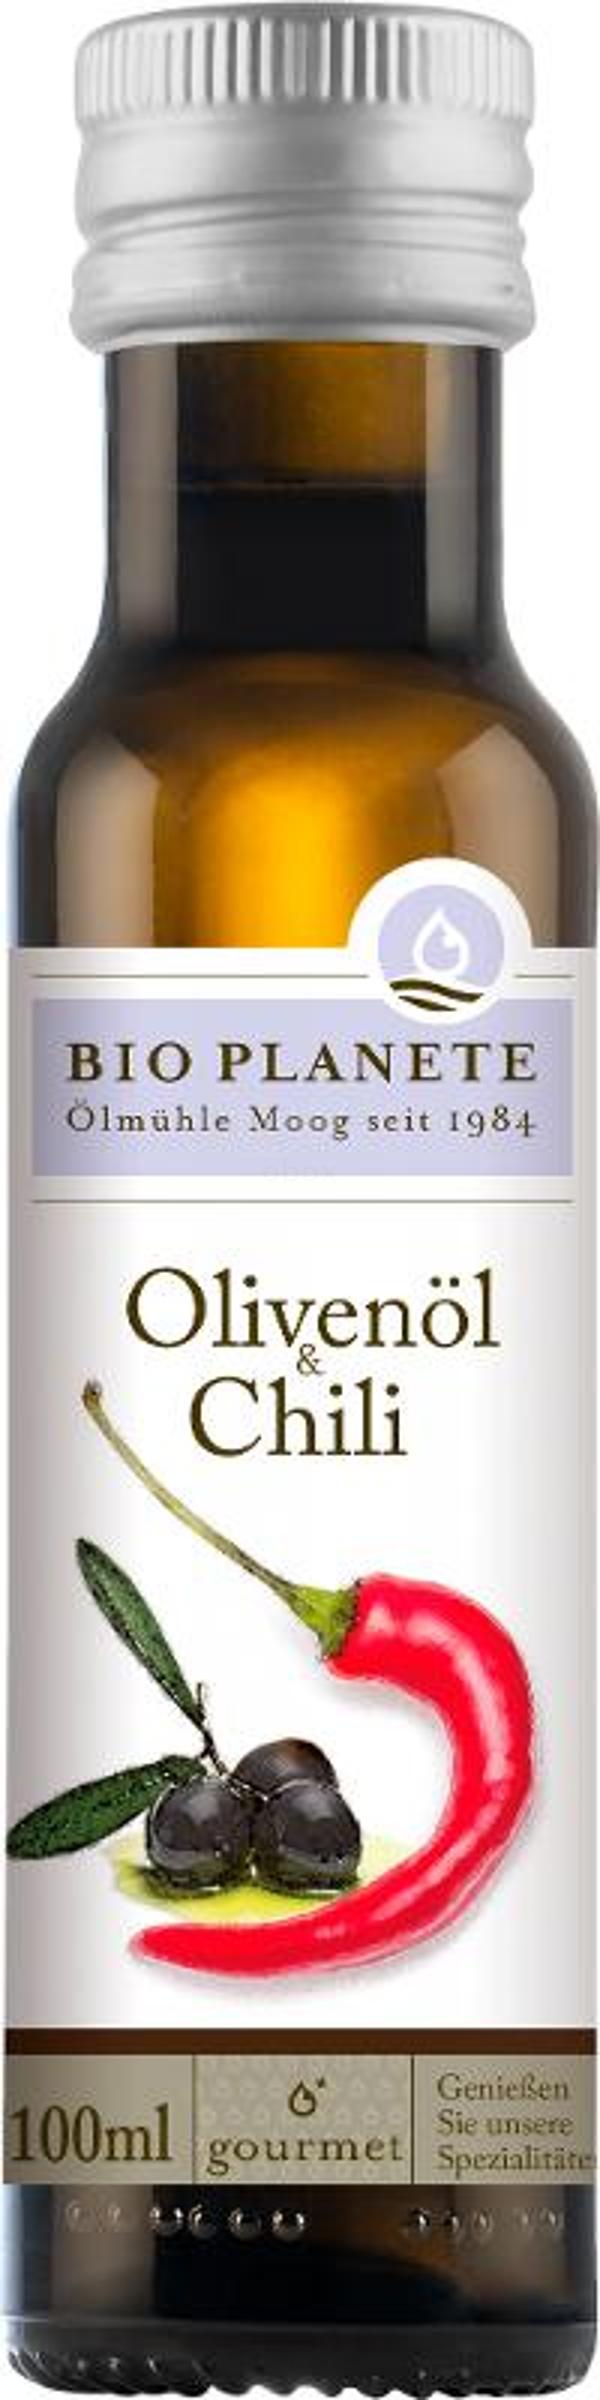 Produktfoto zu Olivengewürzöl mit Chili